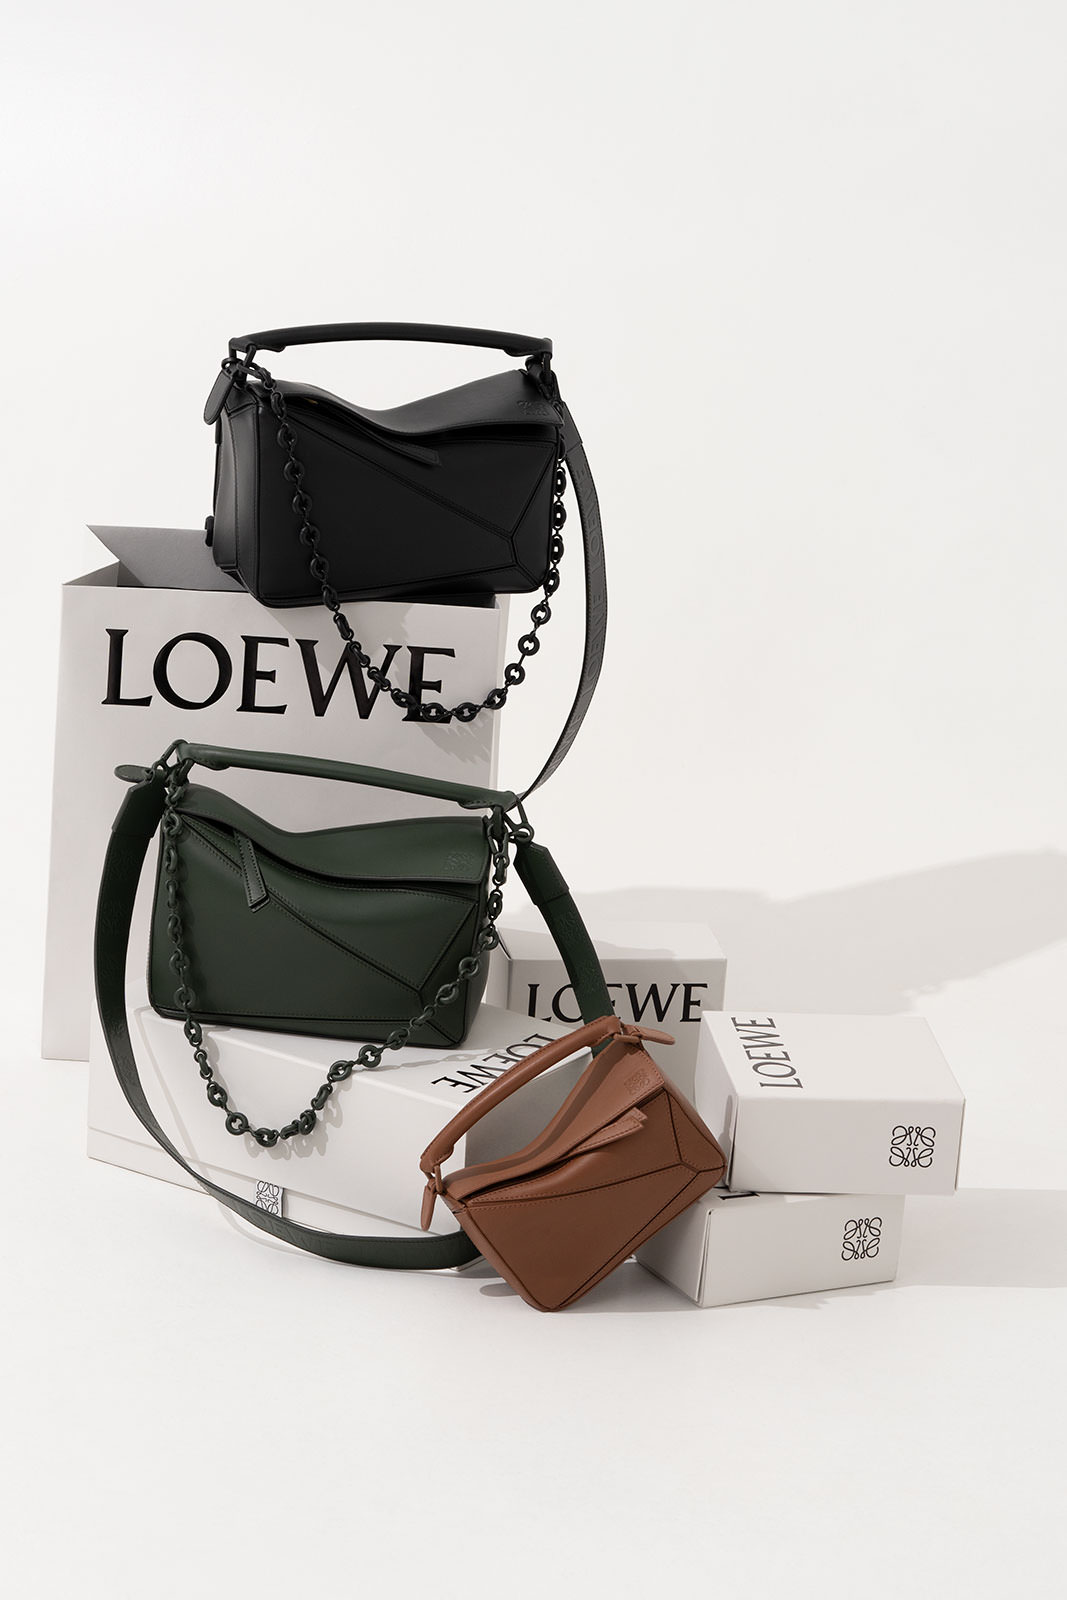 LOEWE PUZZLE BAG SIZE COMPARISON 💕😘 NANO, SMALL VS MEDIUM - LOEWE  handbags PUZZLE bag - BEST SIZE 